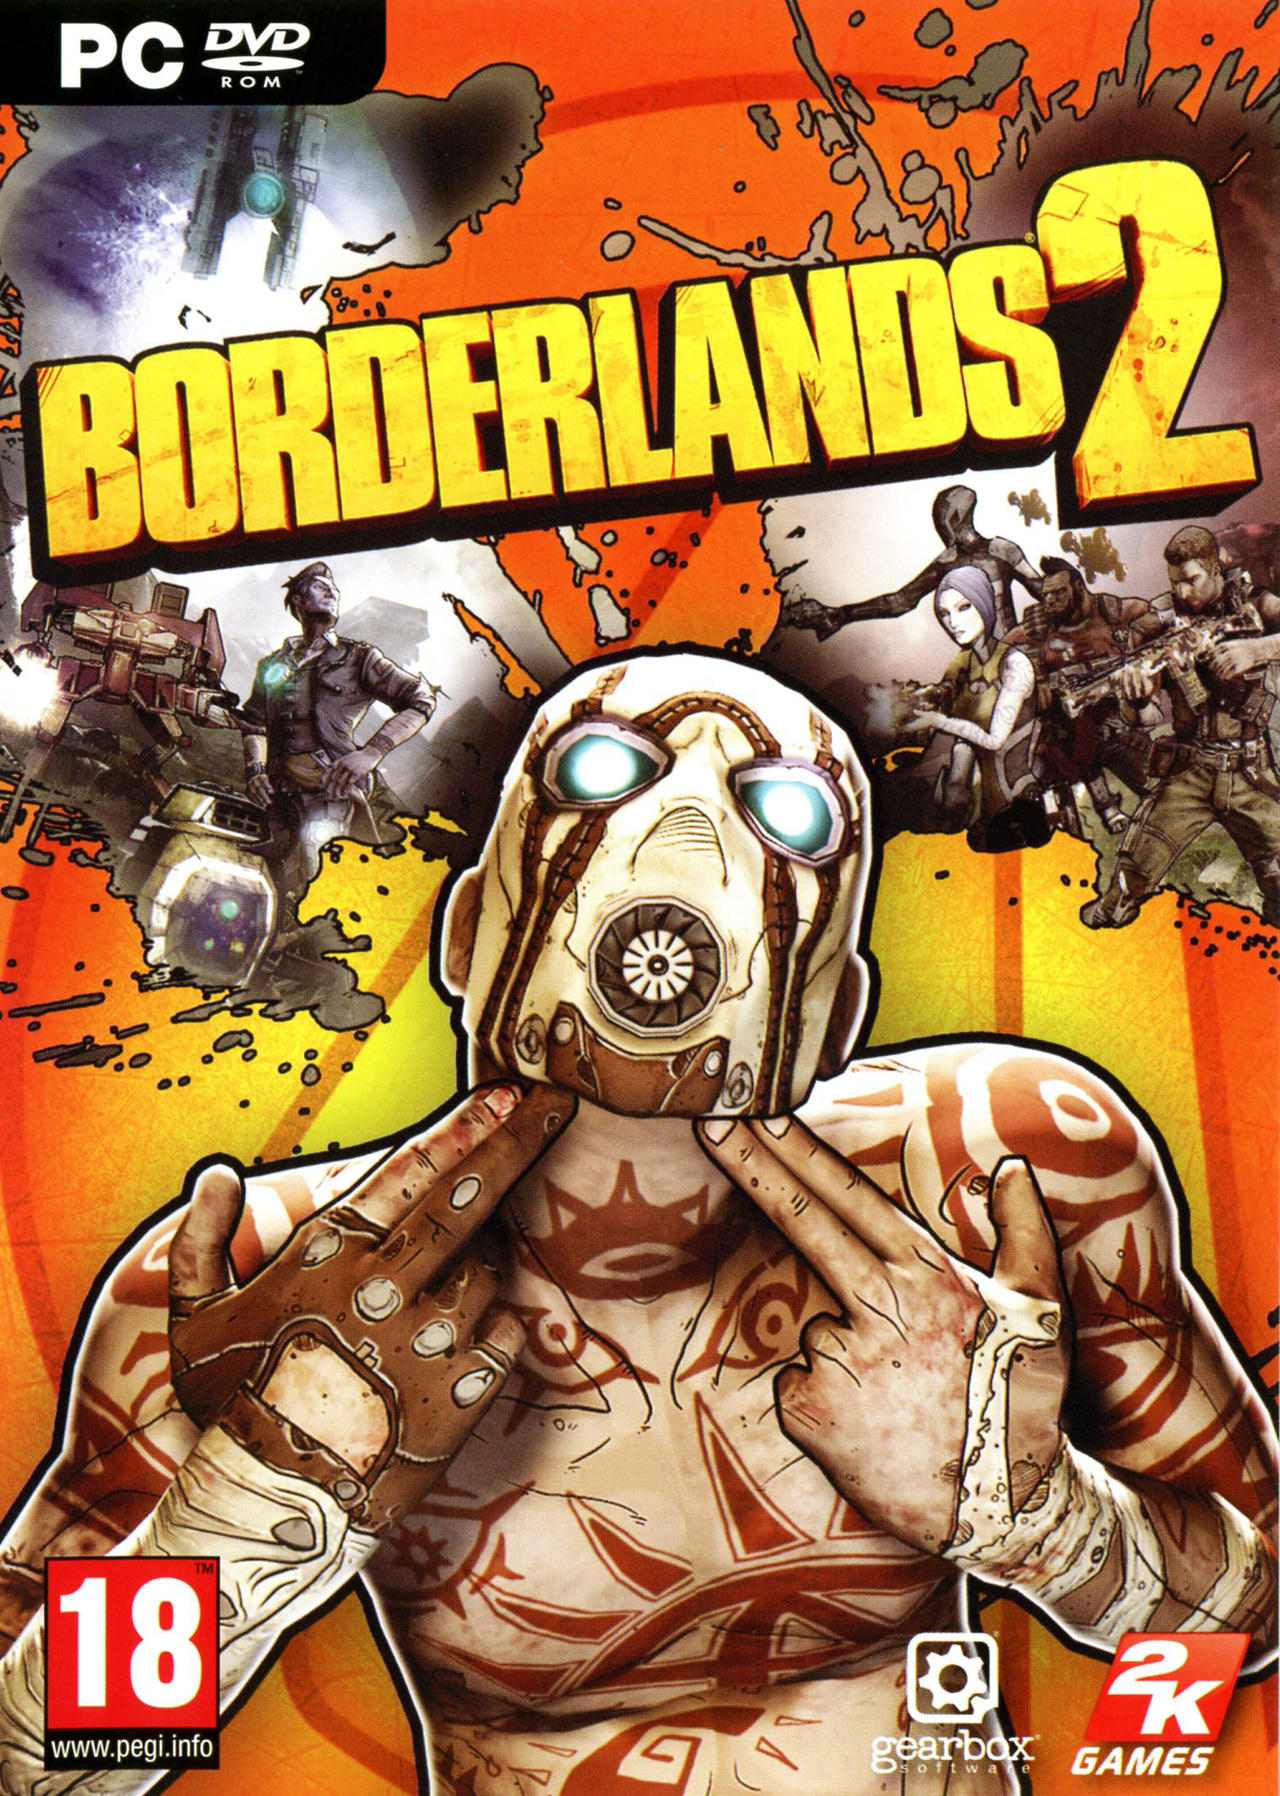 Borderlands 2 Console Commands God Mode